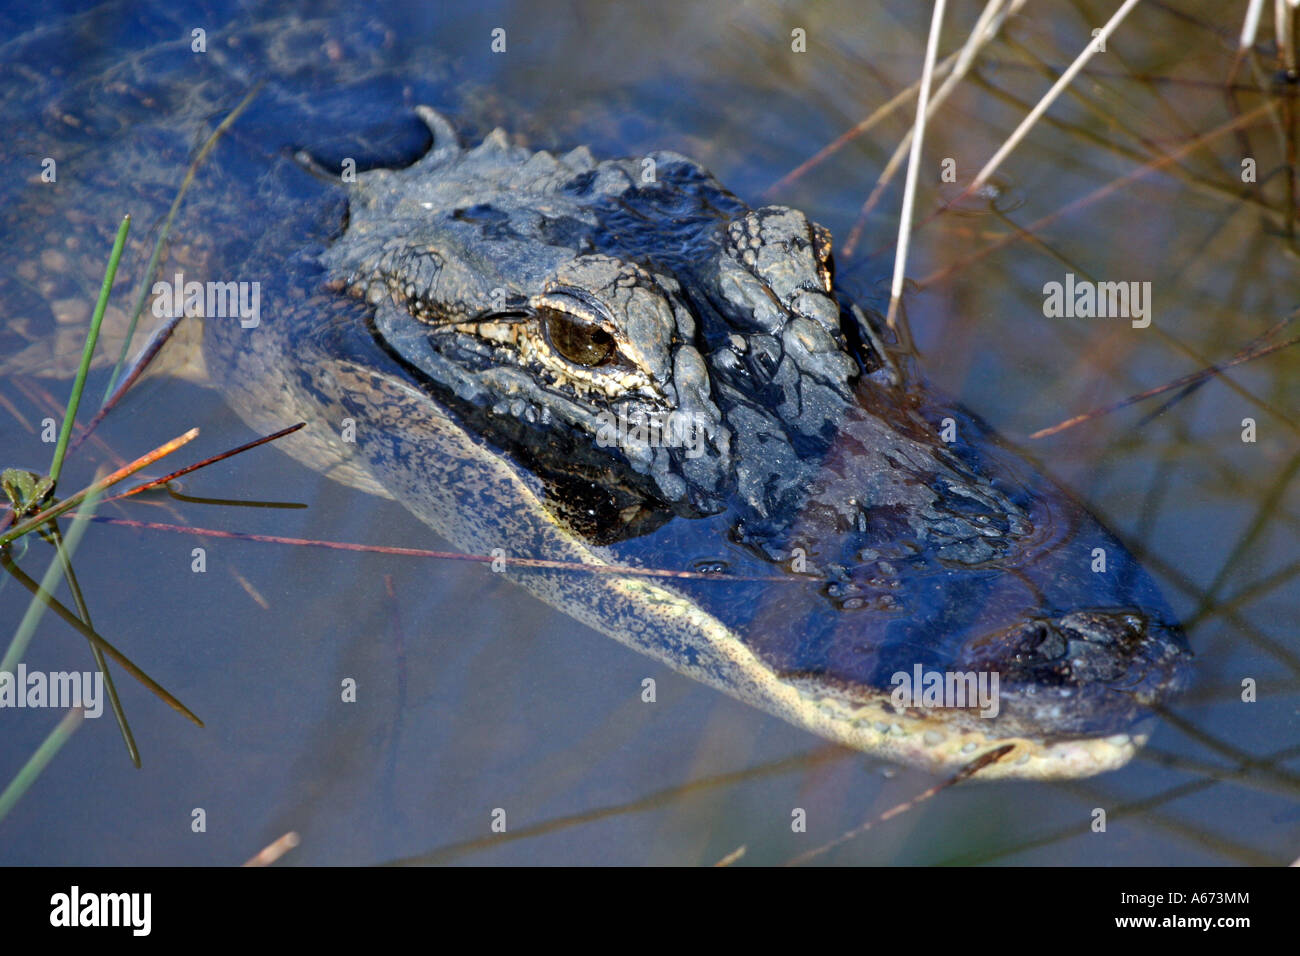 American Alligator peering from water Everglades Florida Stock Photo